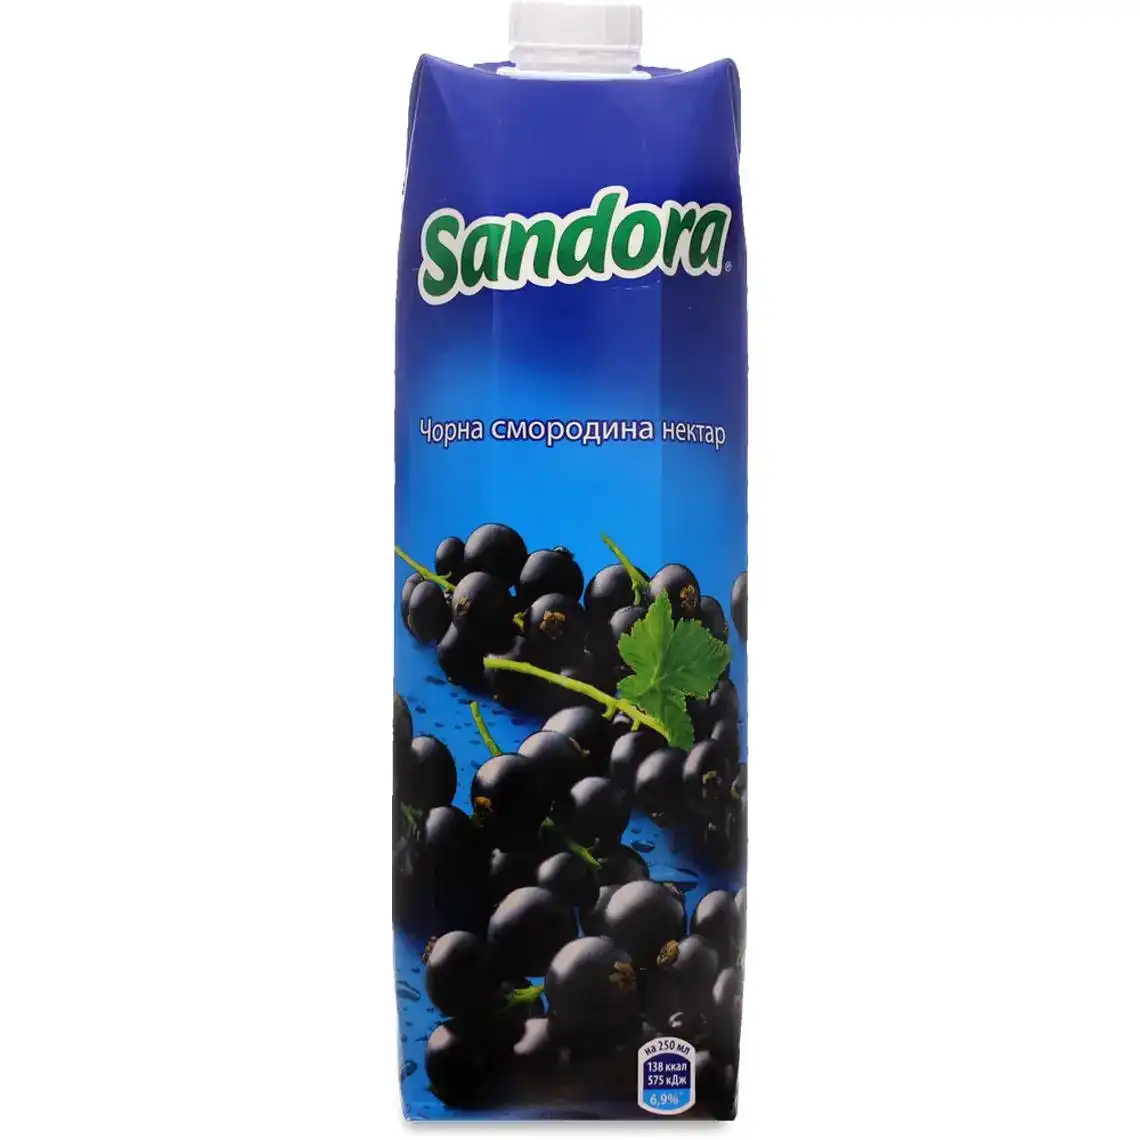 Нектар Sandora чорна смородина 950 мл